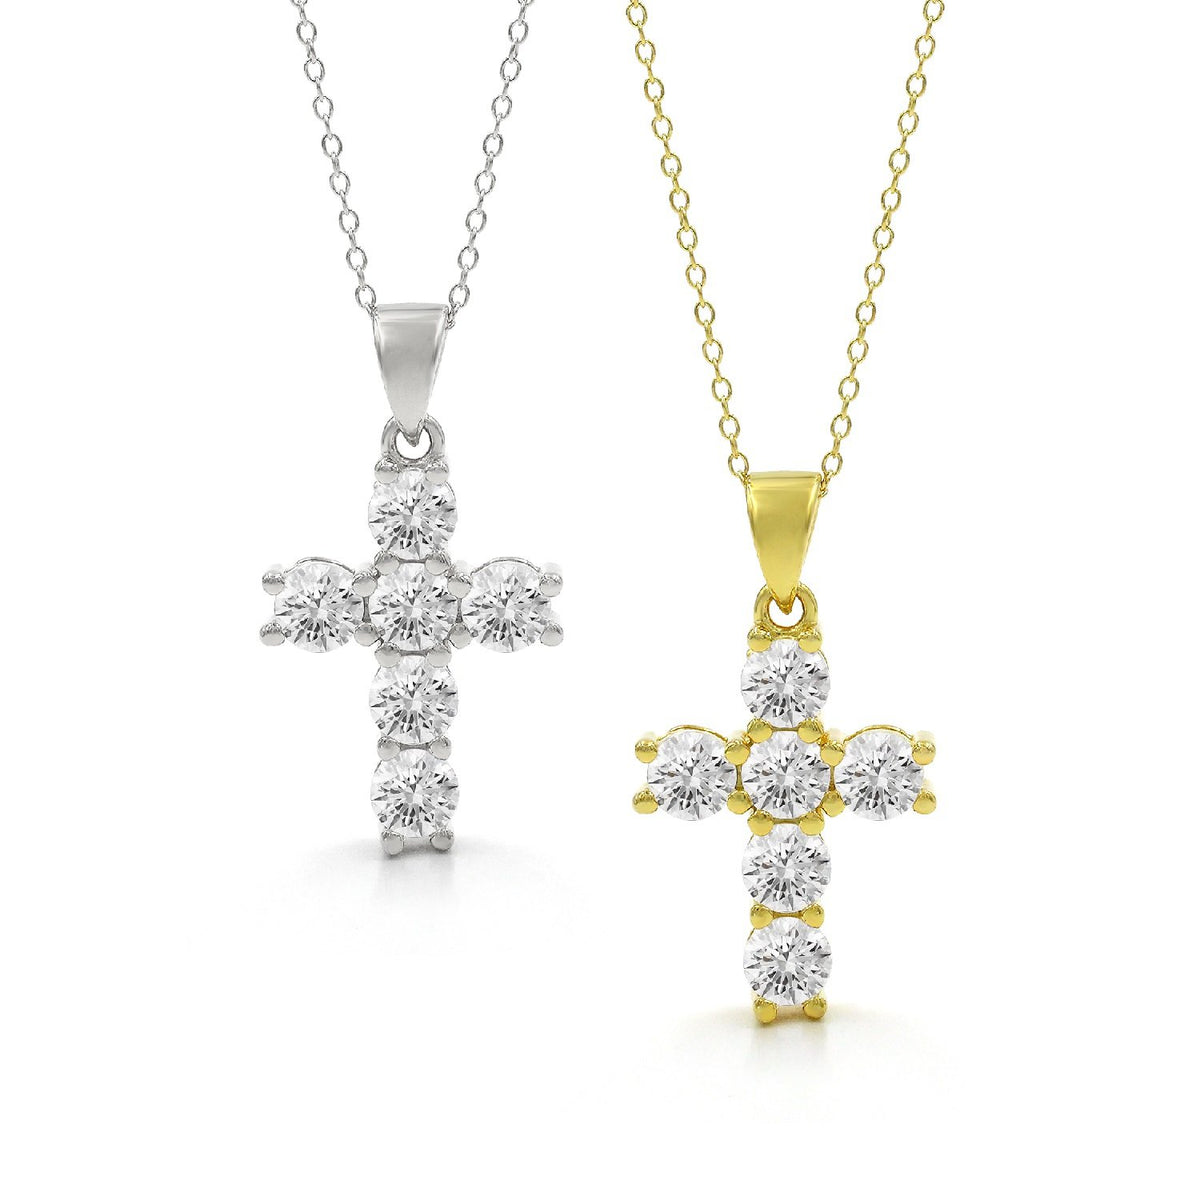 925 Sterling Silver Minimalist Cross Pendant Necklace